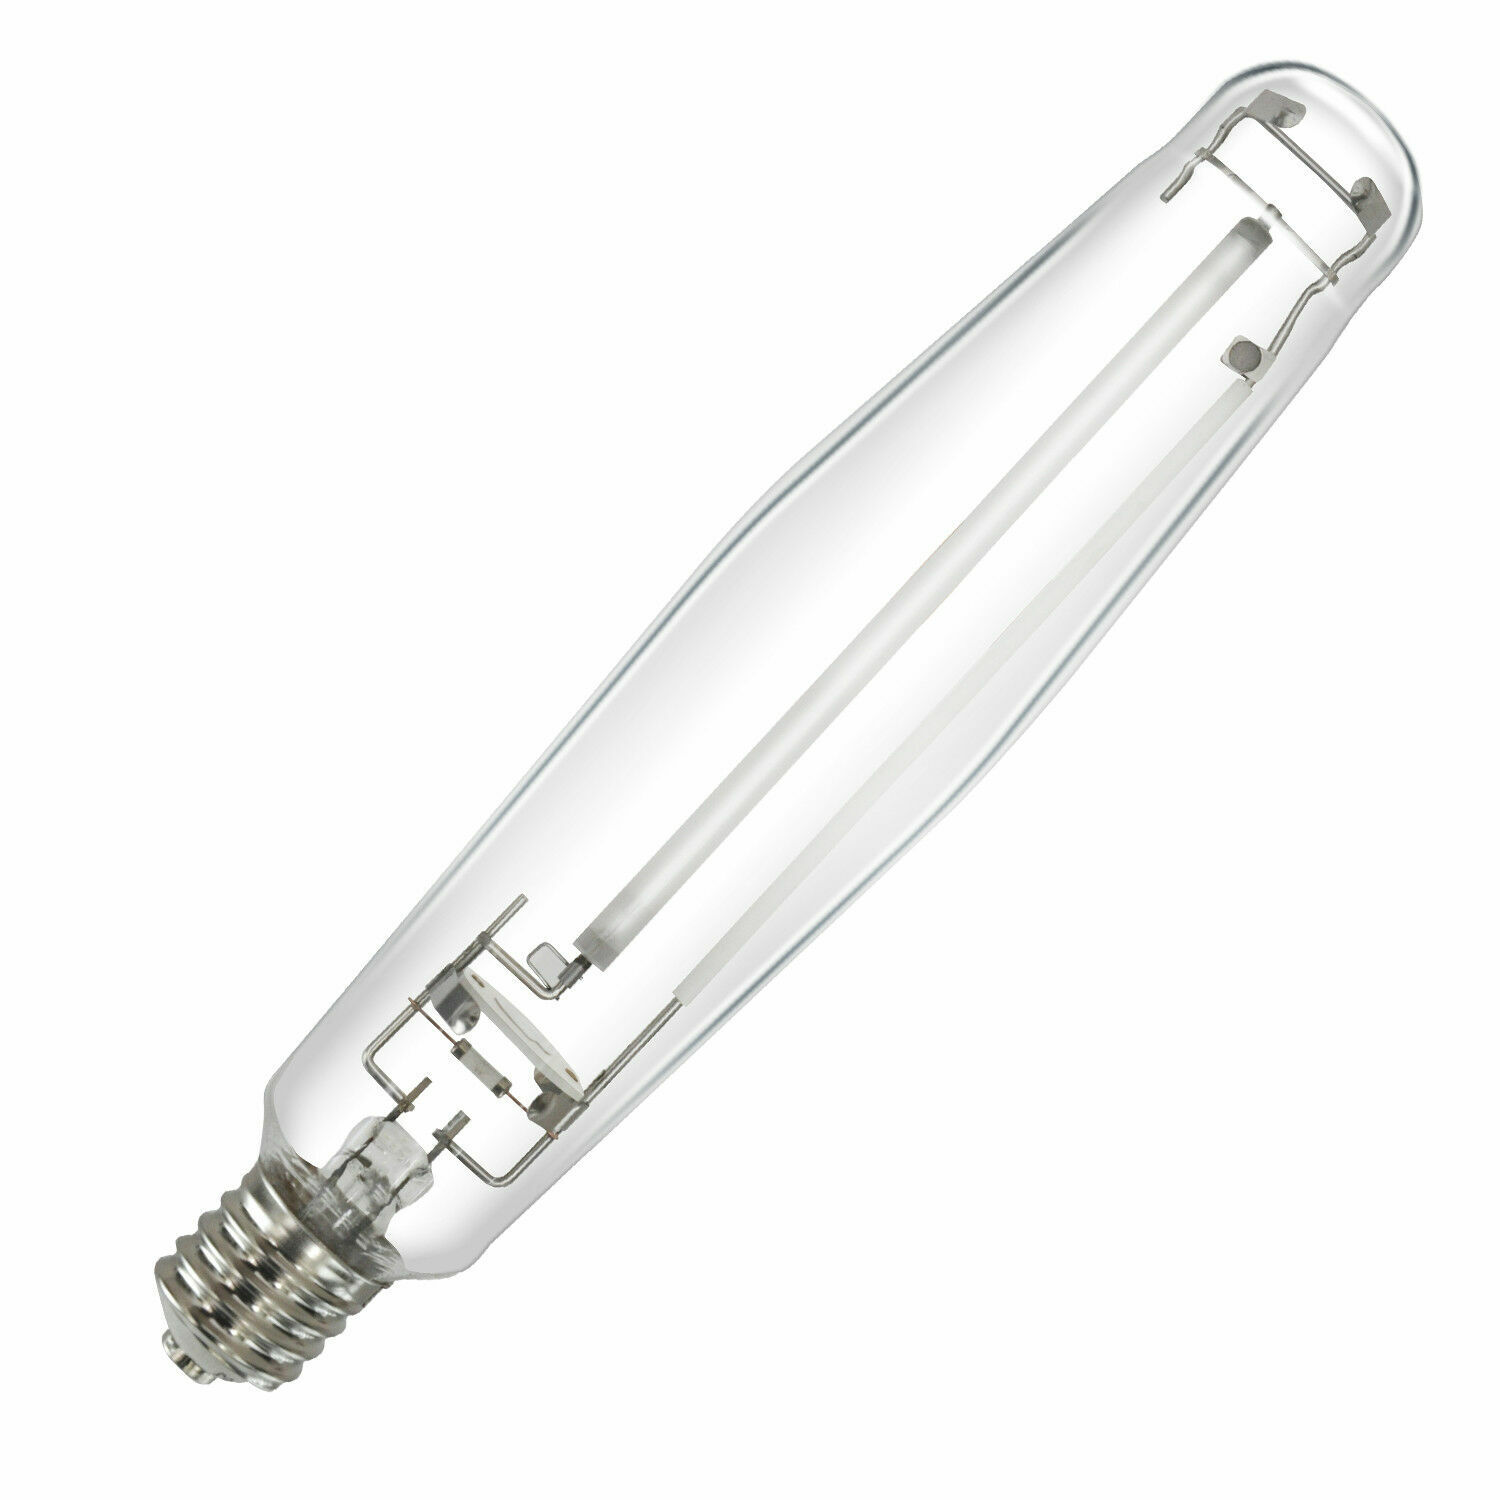 iPower 400-1000 Watt HPS High Pressure Sodium Metal Halide Grow Light Bulb Lamp